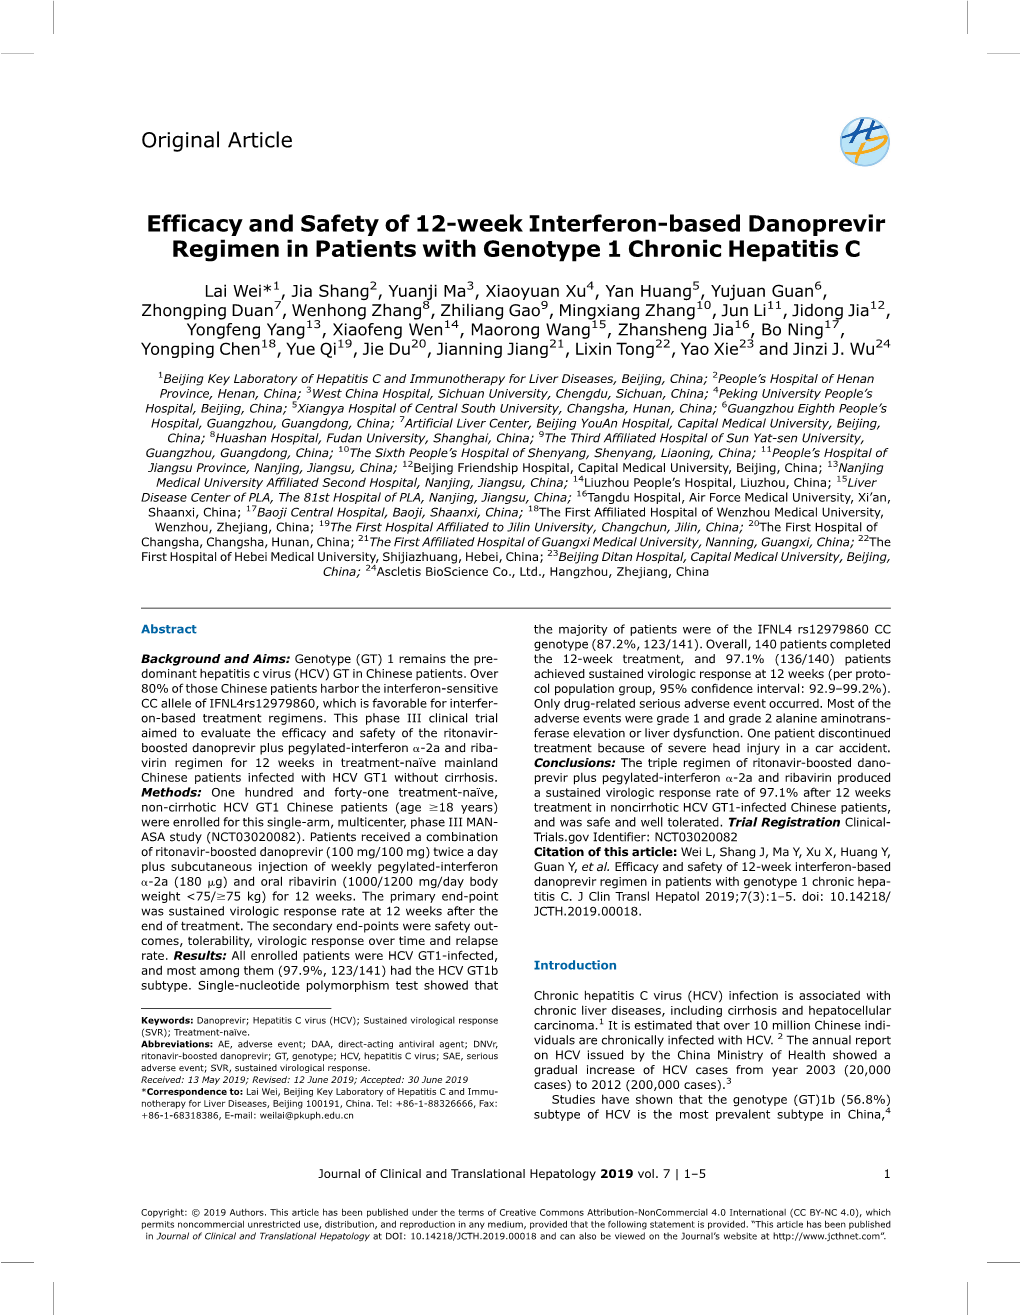 Efficacy and Safety of 12-Week Interferon-Based Danoprevir Regimen in Patients with Genotype 1 Chronic Hepatitis C